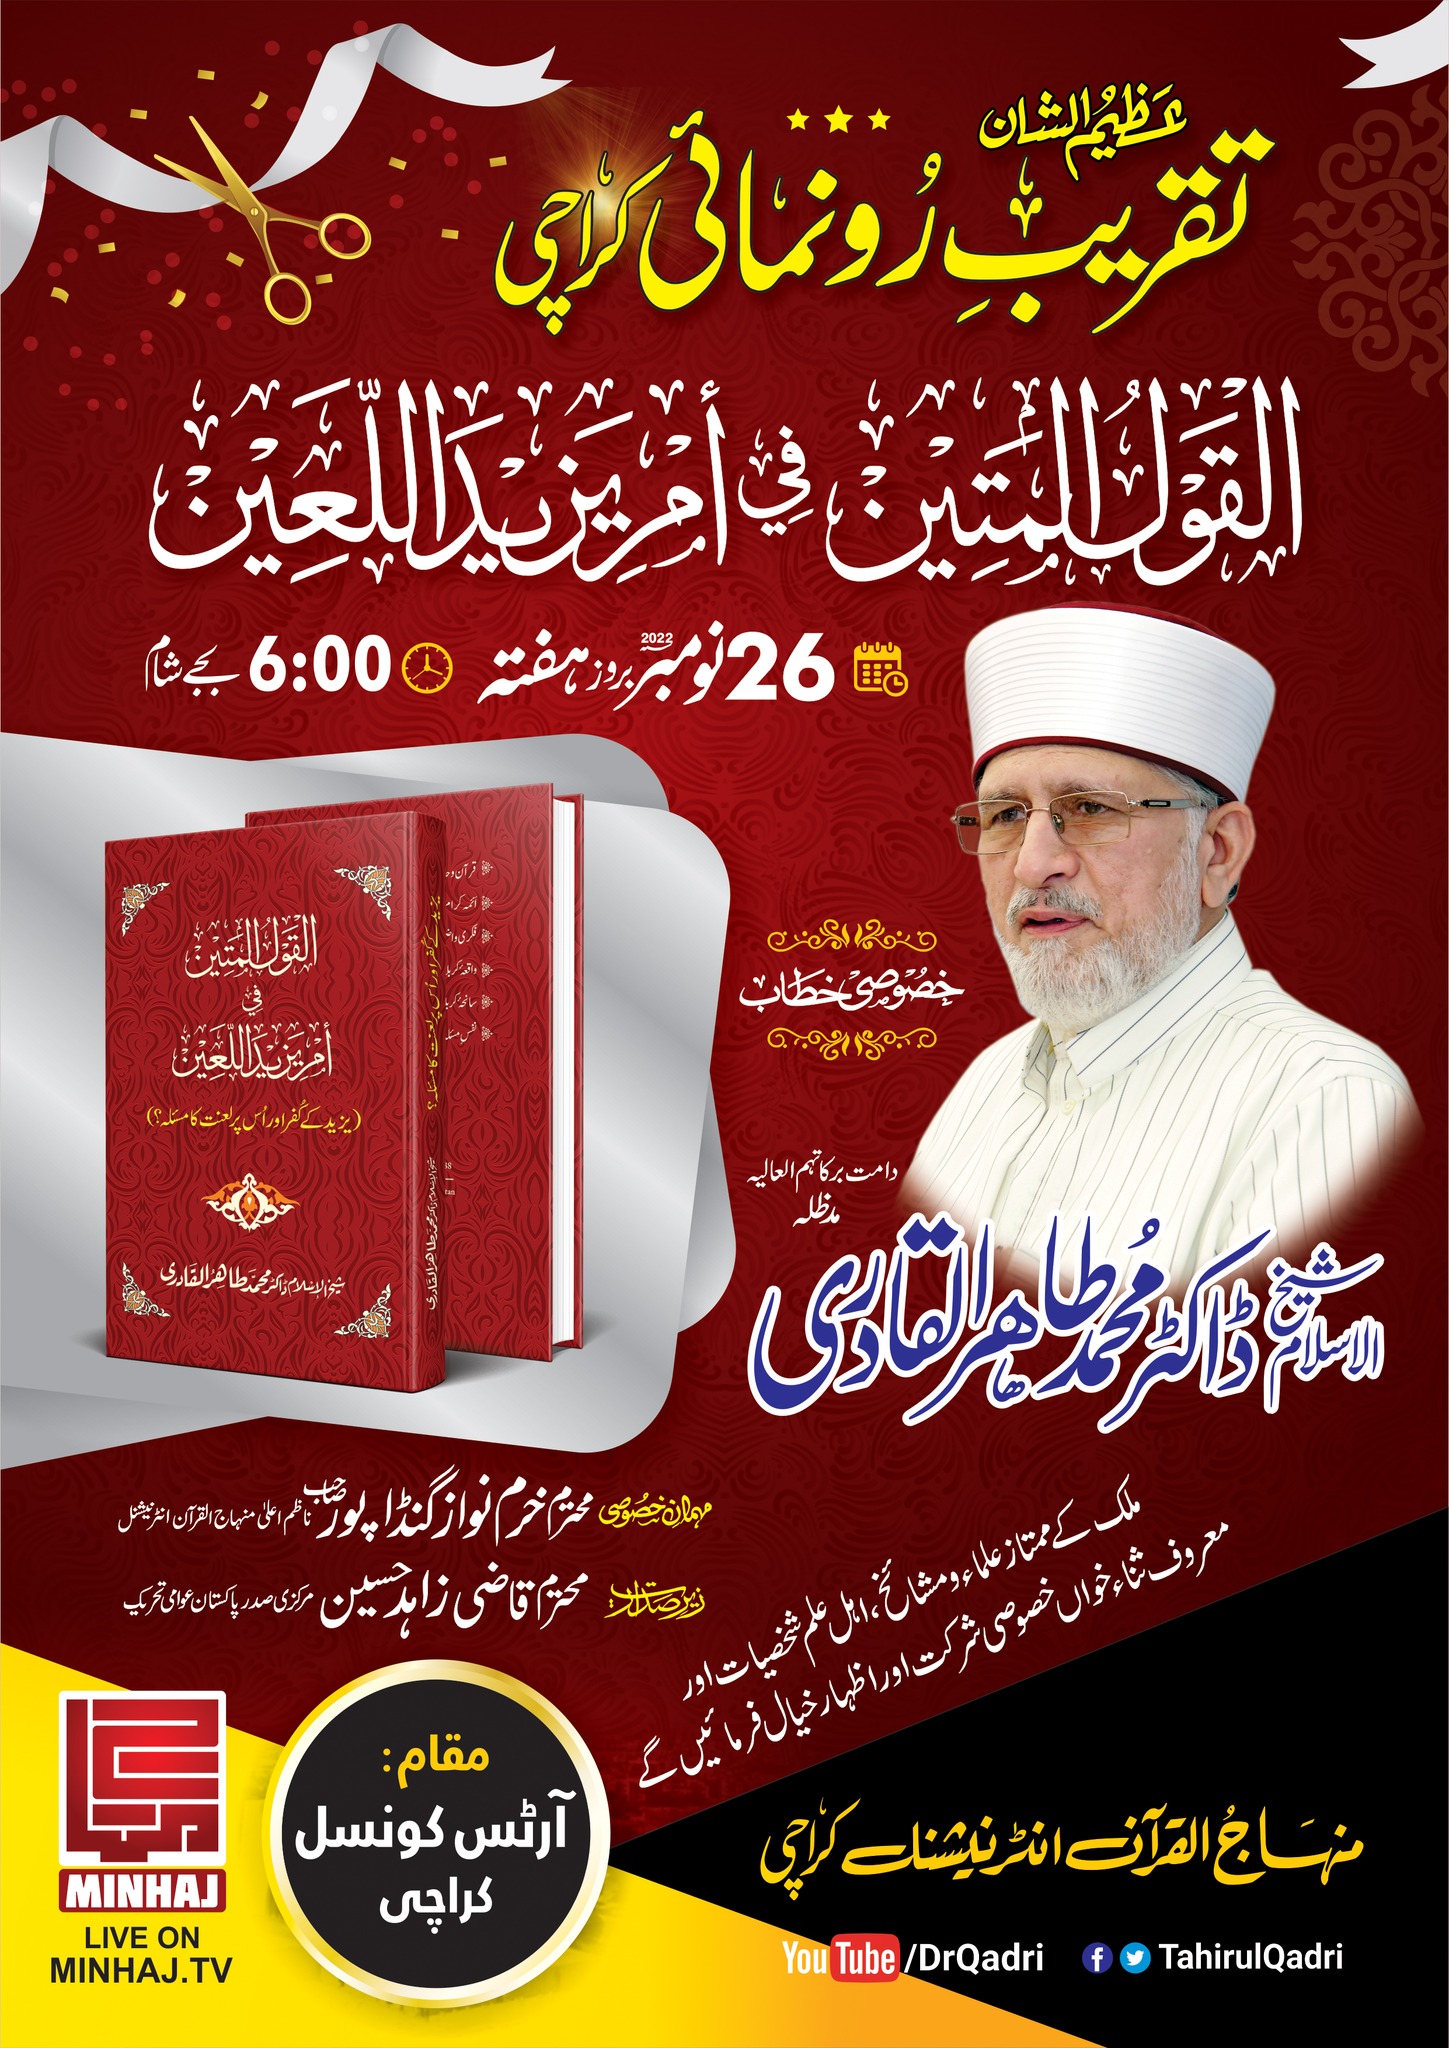 Launching Dr Qadri book Yazid ke Kufr awr us par Laanat ka Masala?